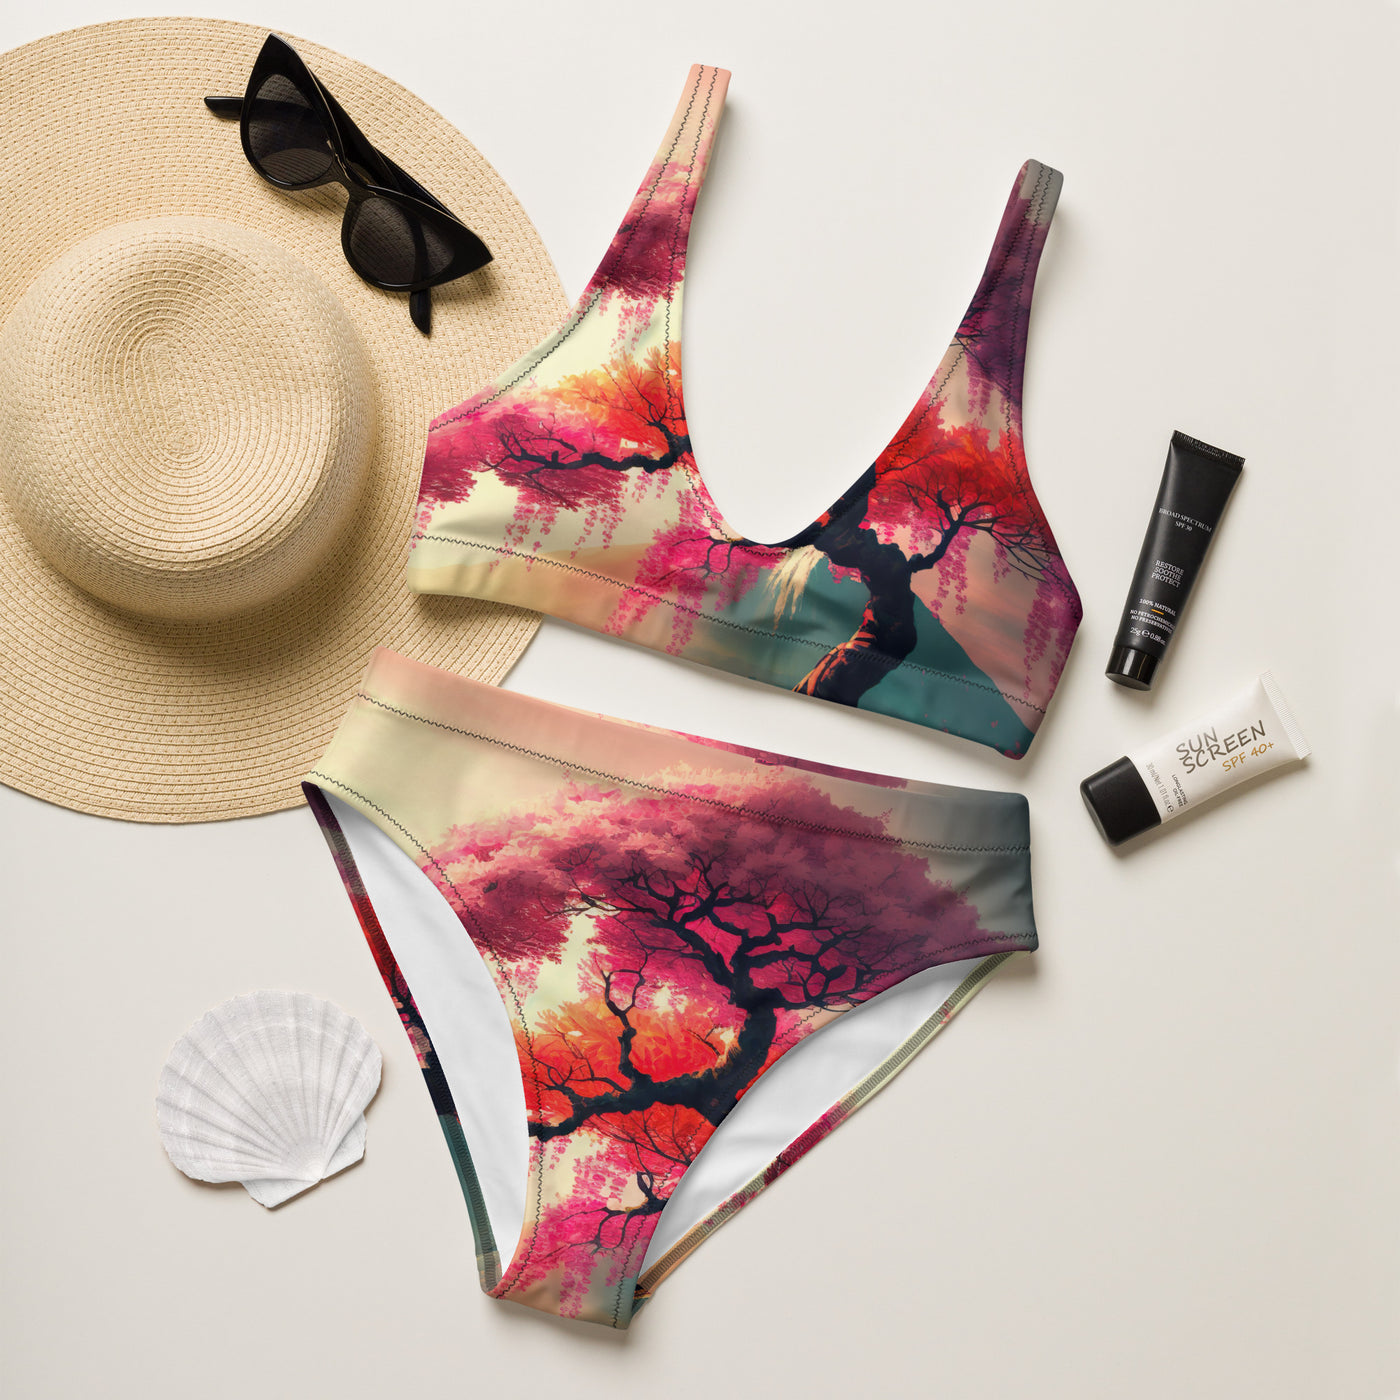 Cherry Blossom High-Waisted Bikini Sewn and Designed in USA